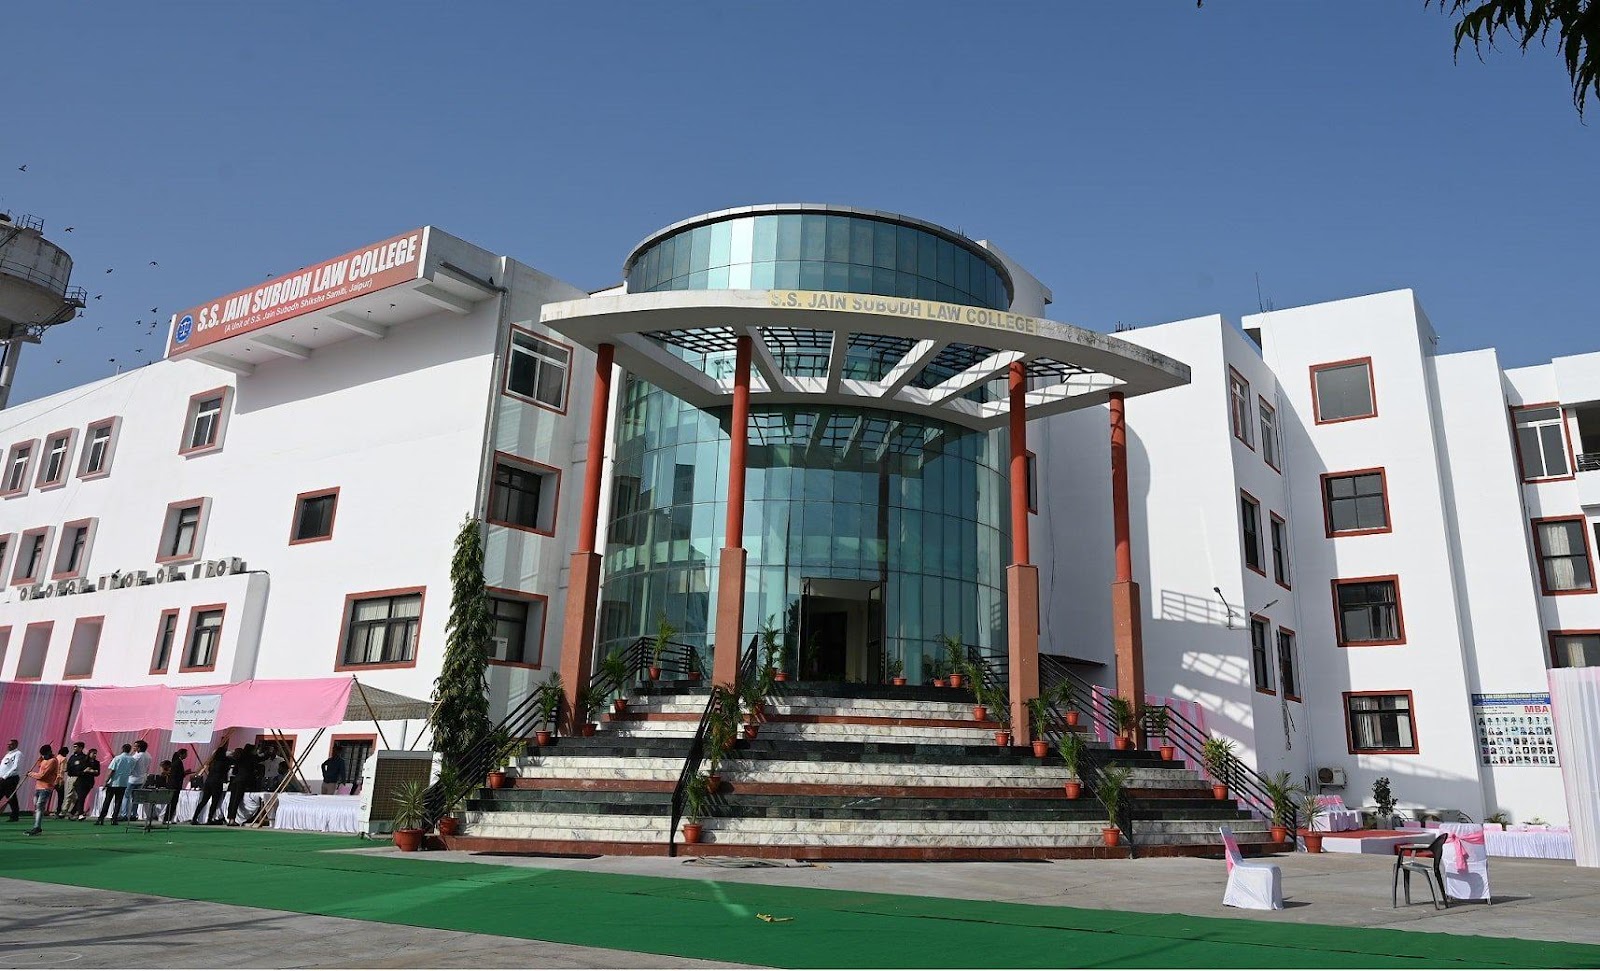  S.S. Jain Subodh Law College